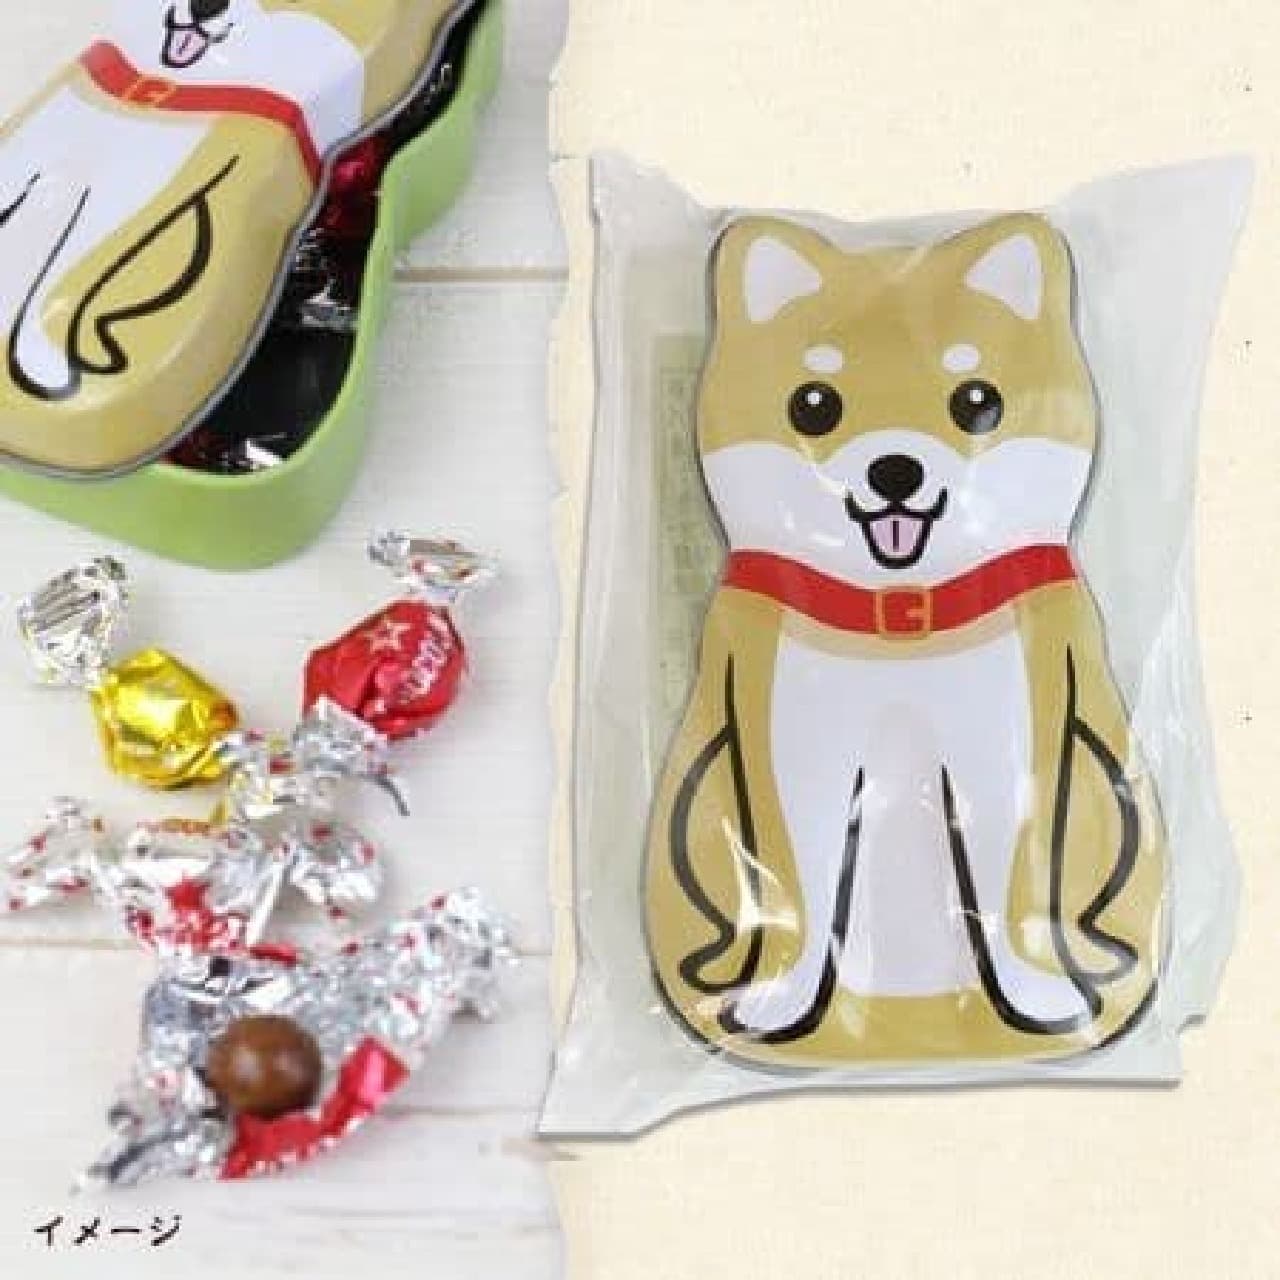 Dog motif sweets on KALDI